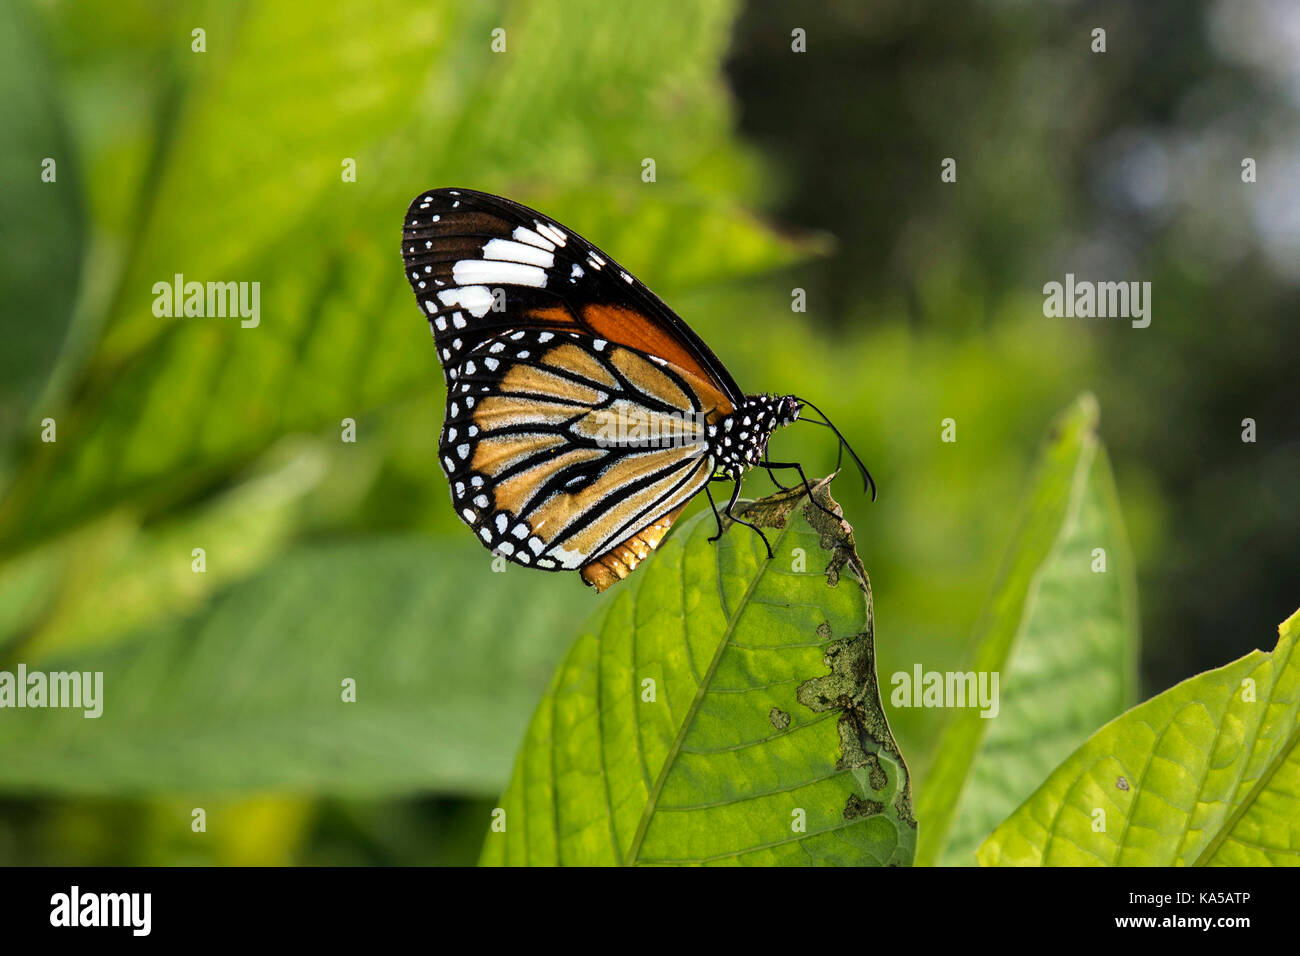 butterfly sitting on leaf, thane, maharashtra, India, Asia - sgg 258260 Stock Photo